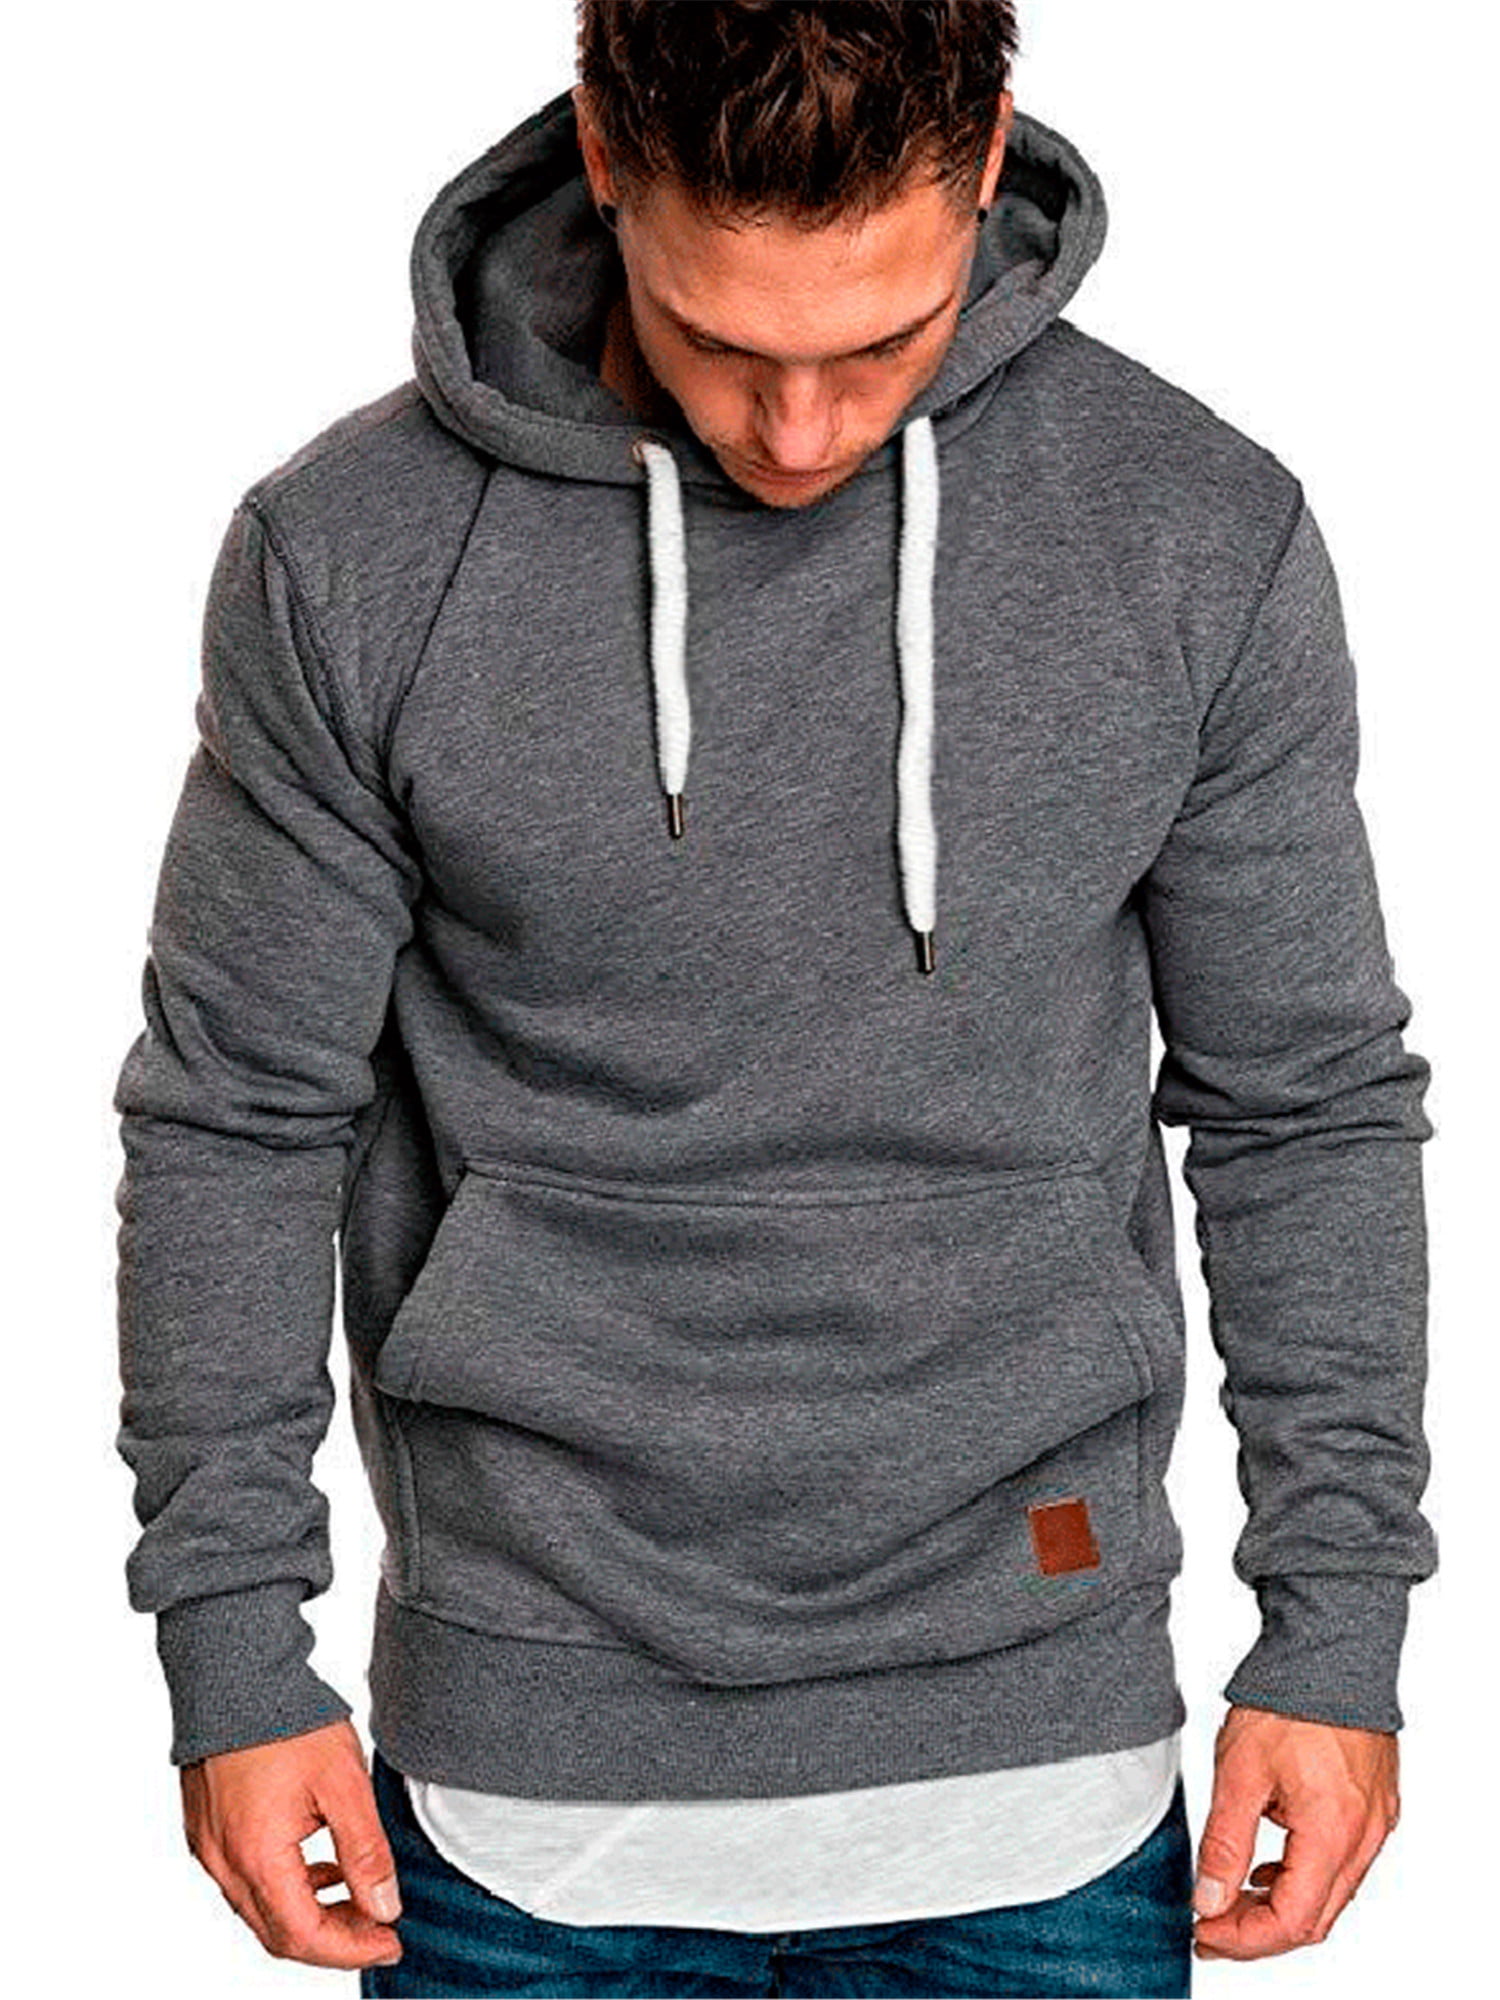 Aiyino Men's Short Sleeve Athletic Hoodies Sport Sweatshirt Solid Color Fashion Pullover 